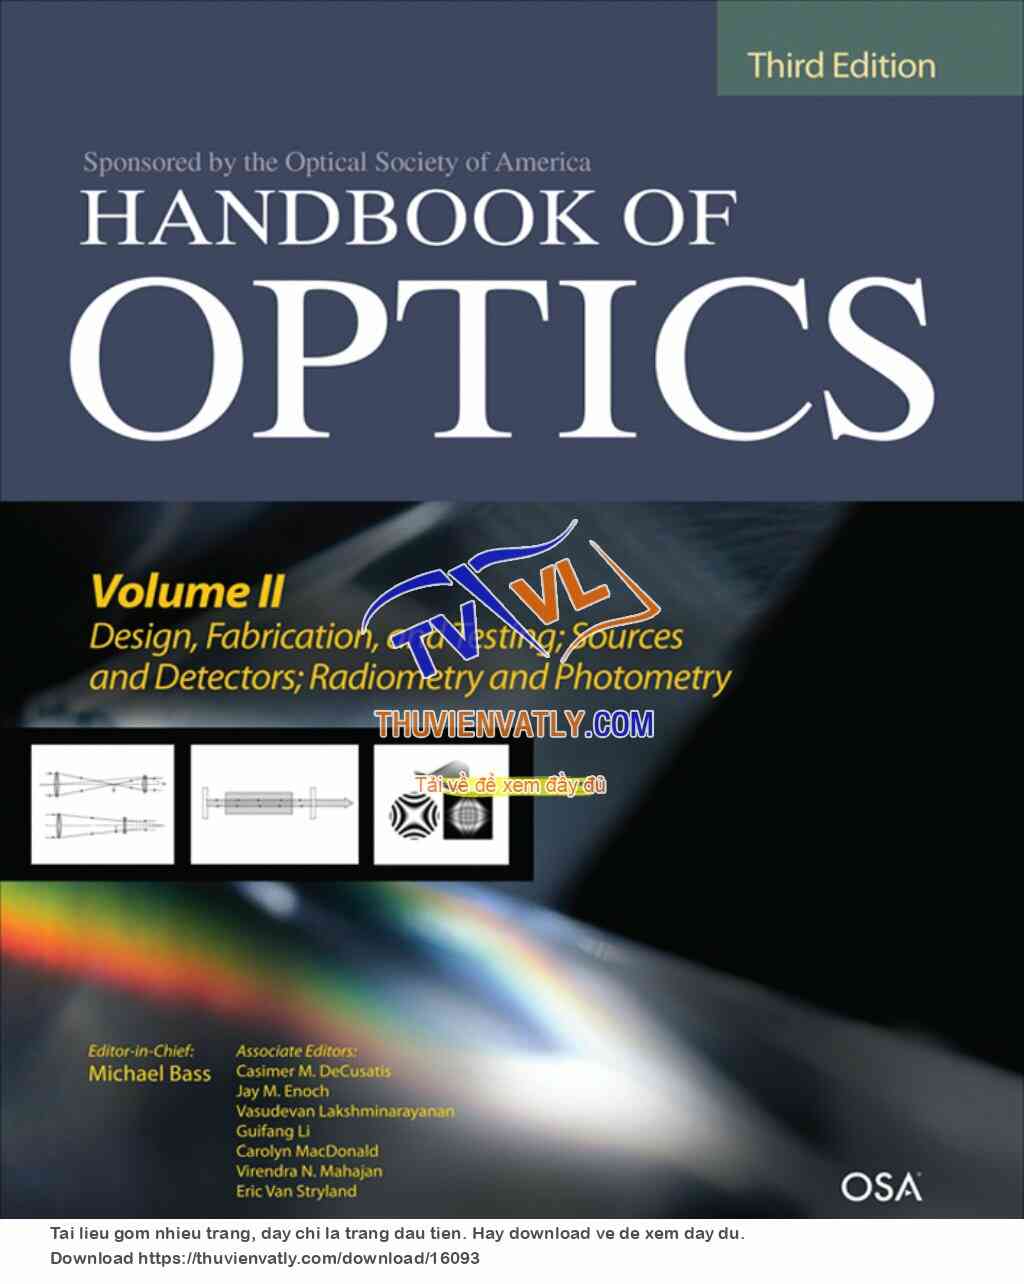 Handbook of Optics, Volume 2, Third Edition (Michael Bass et al, McGraw-Hill 2010)